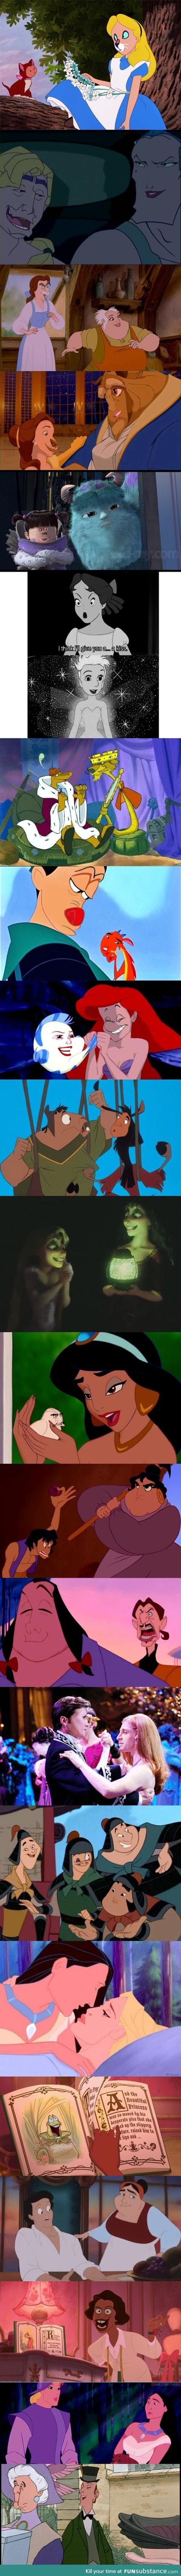 Disney face swap